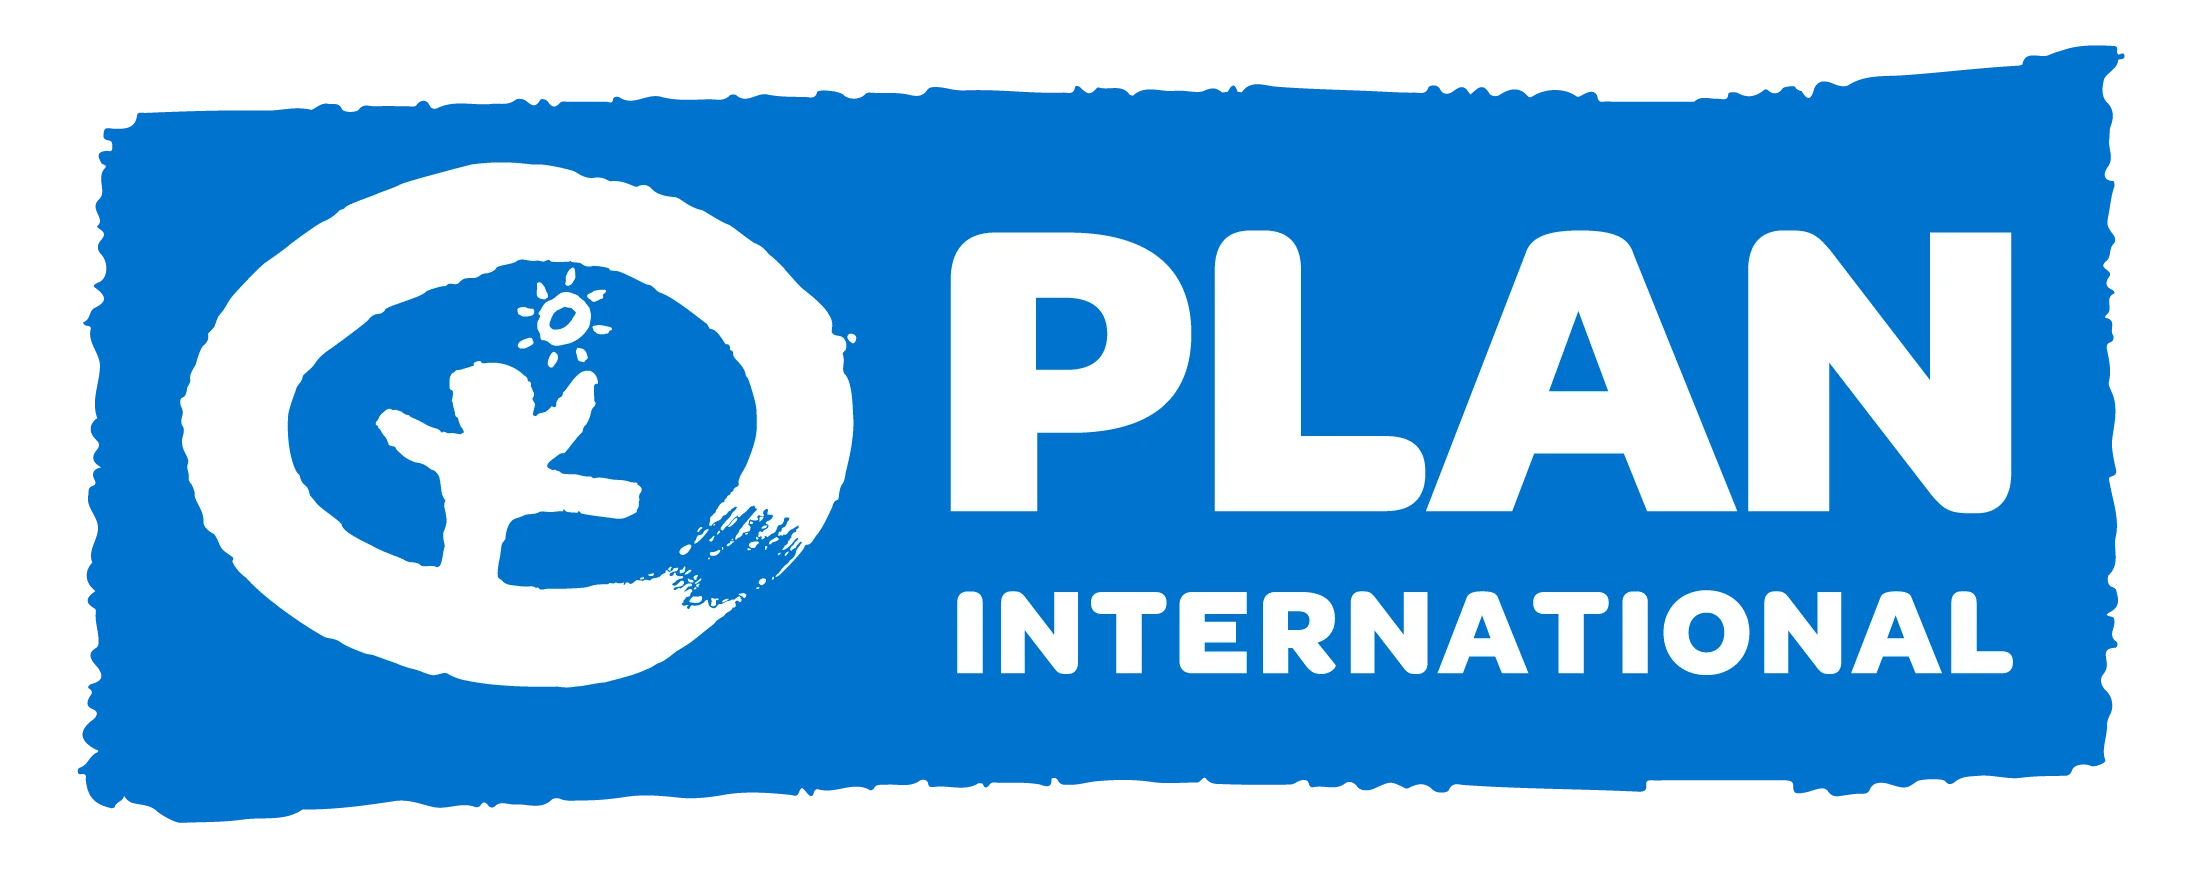 Plan International Nederland